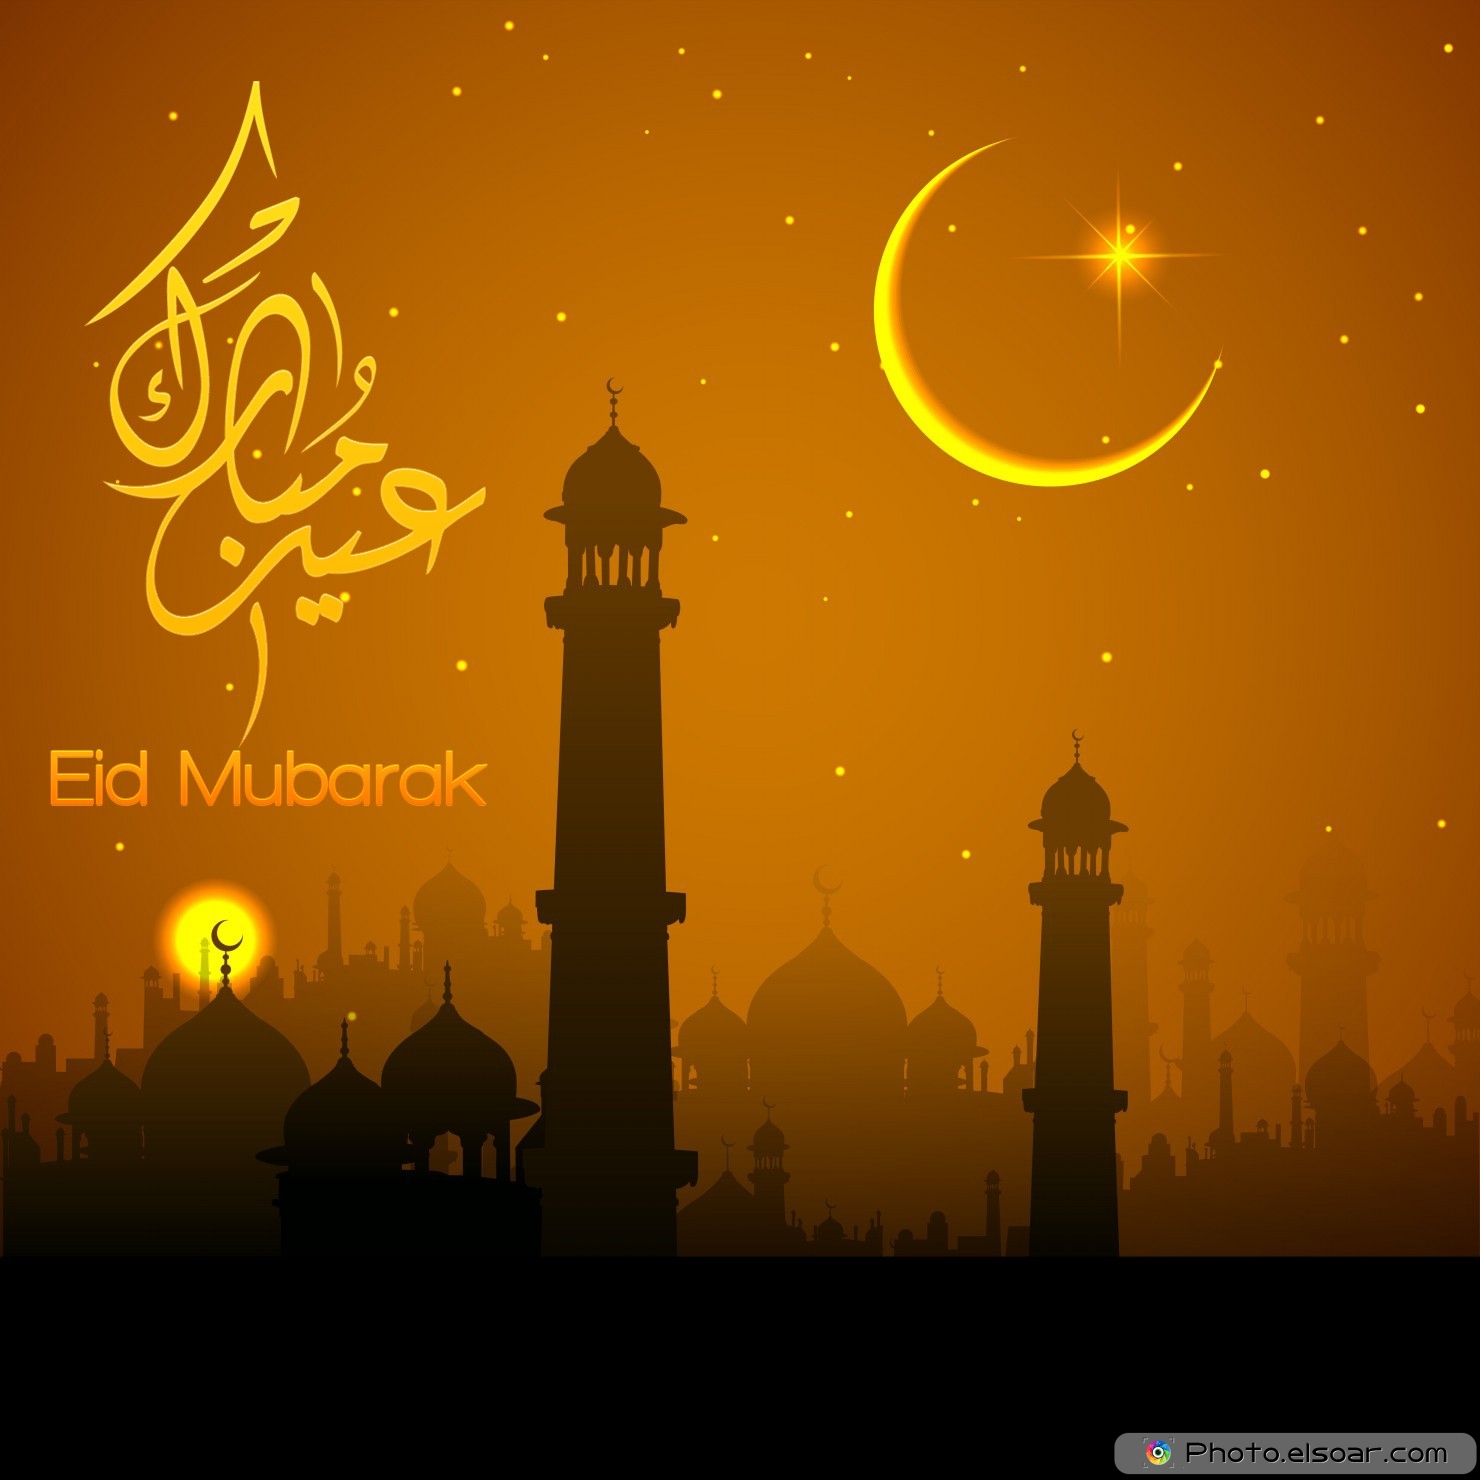 Eid Mubarak Images HD Wallpapers Photos For Whatsapp DP